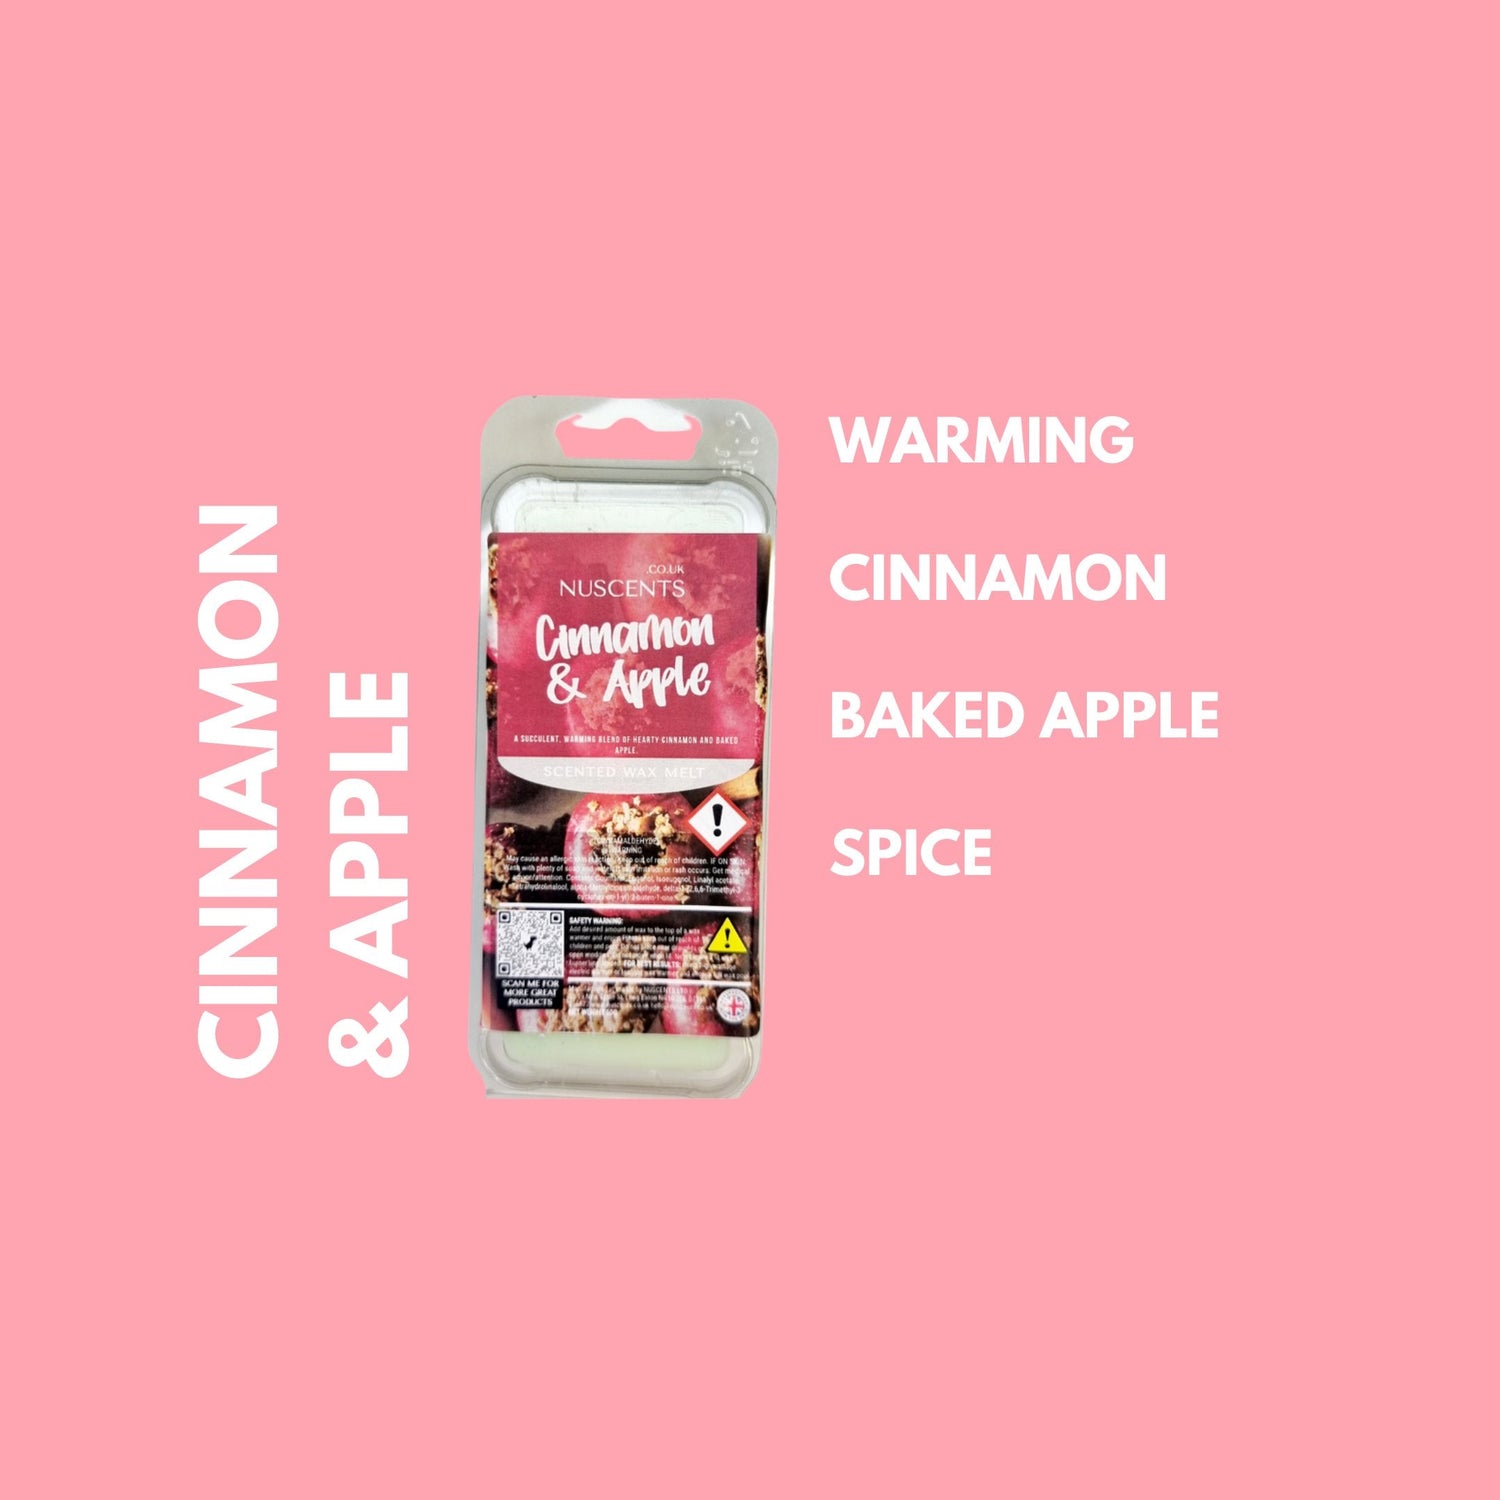 Cinnamon & Apple Wax Melt Scent Notes